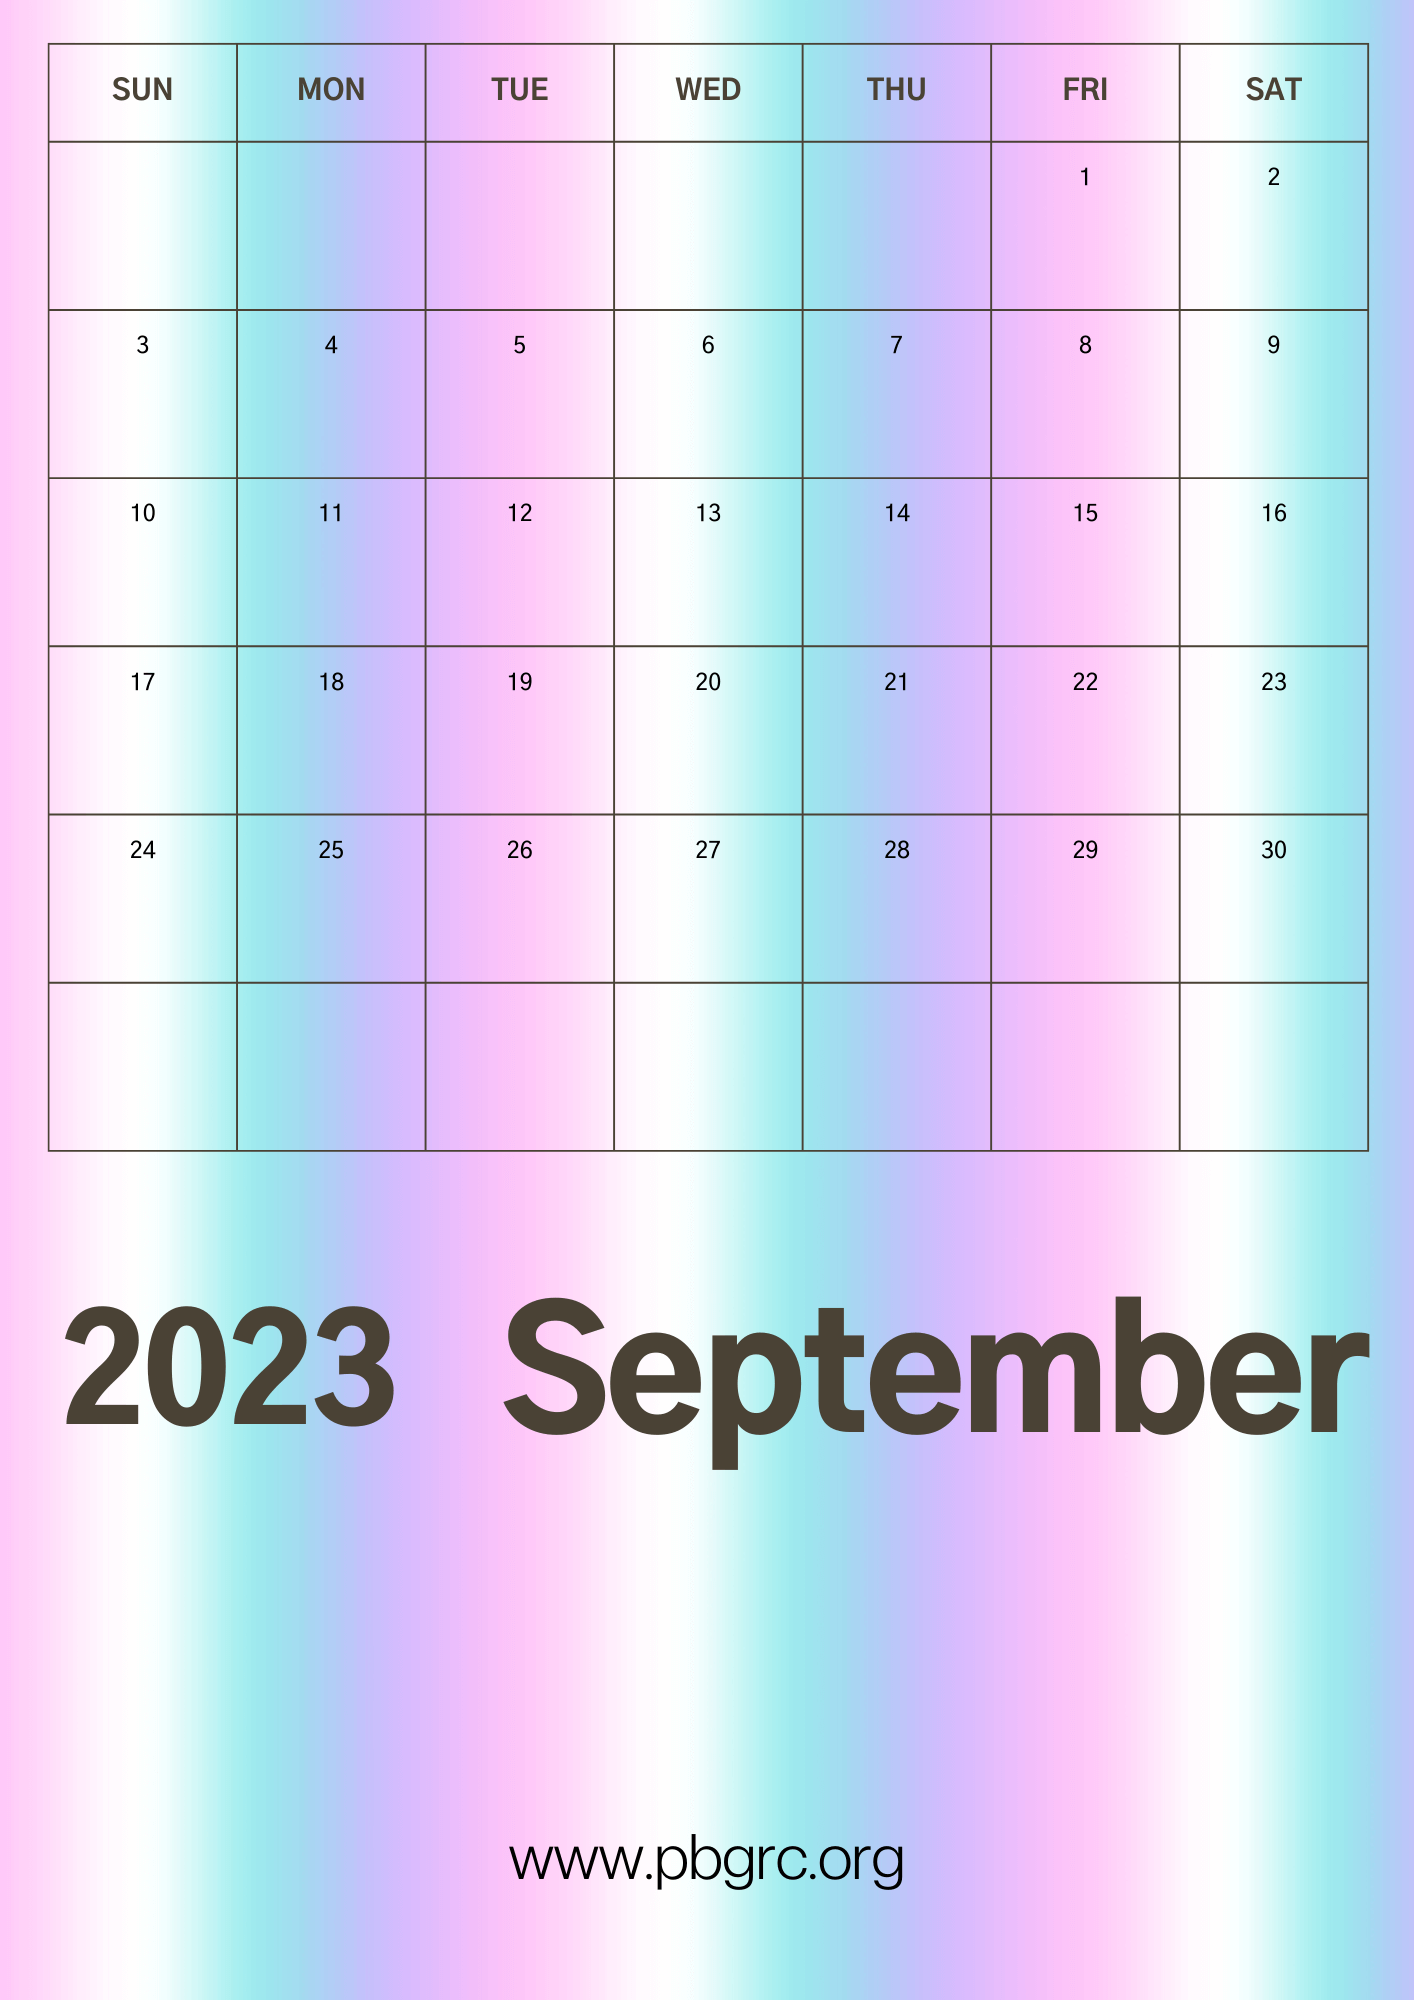 Cute Autumn Floral Wallpaper for September 2023